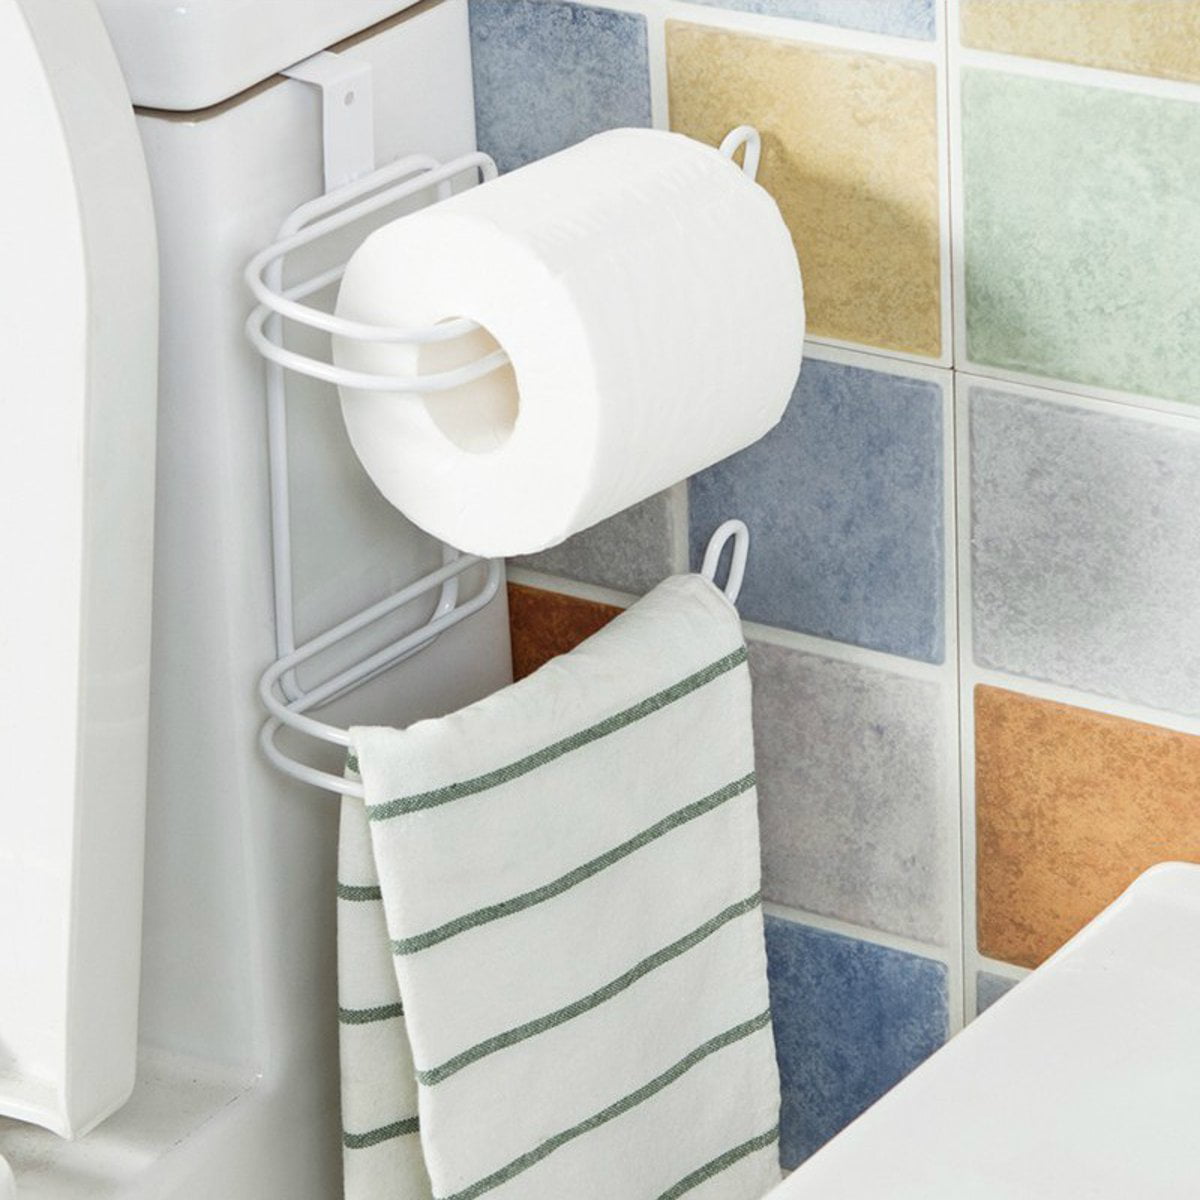 Over The Tank Toilet Paper Roll Holder Kitchen Towel Storage Organizer Hanging Metal